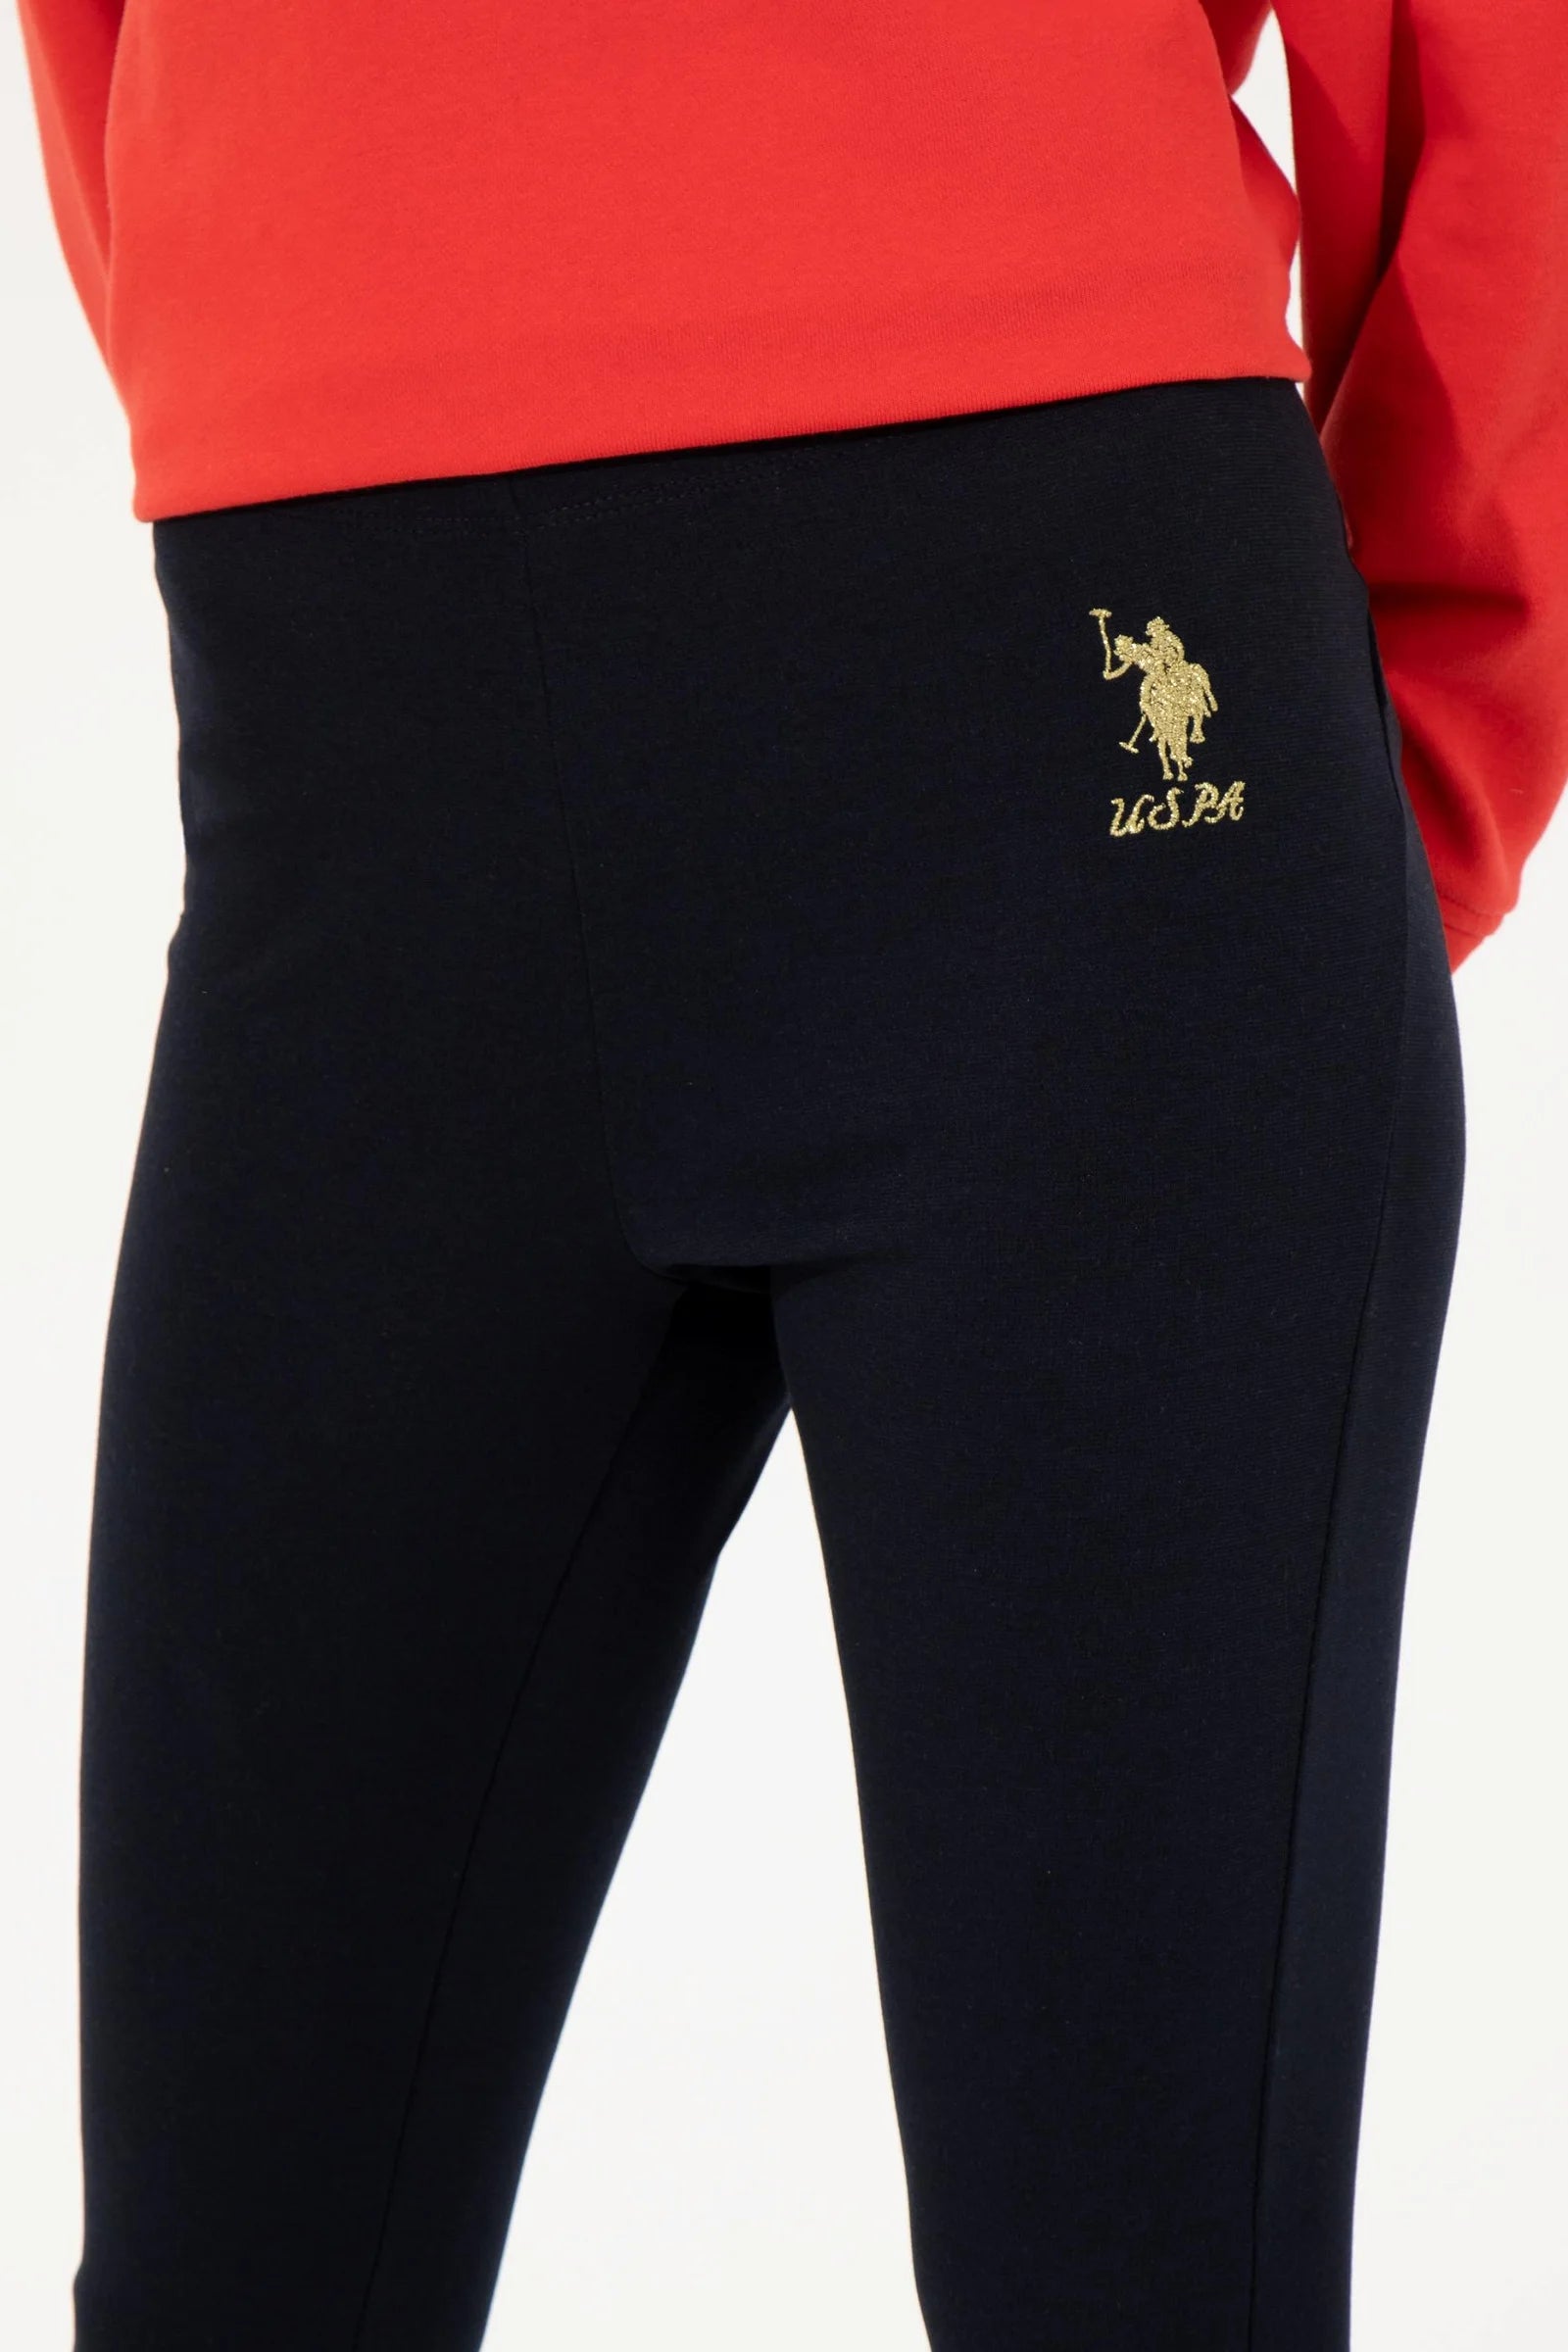 US Polo Assn. Tight Fit Legging with USPA Logo - Women